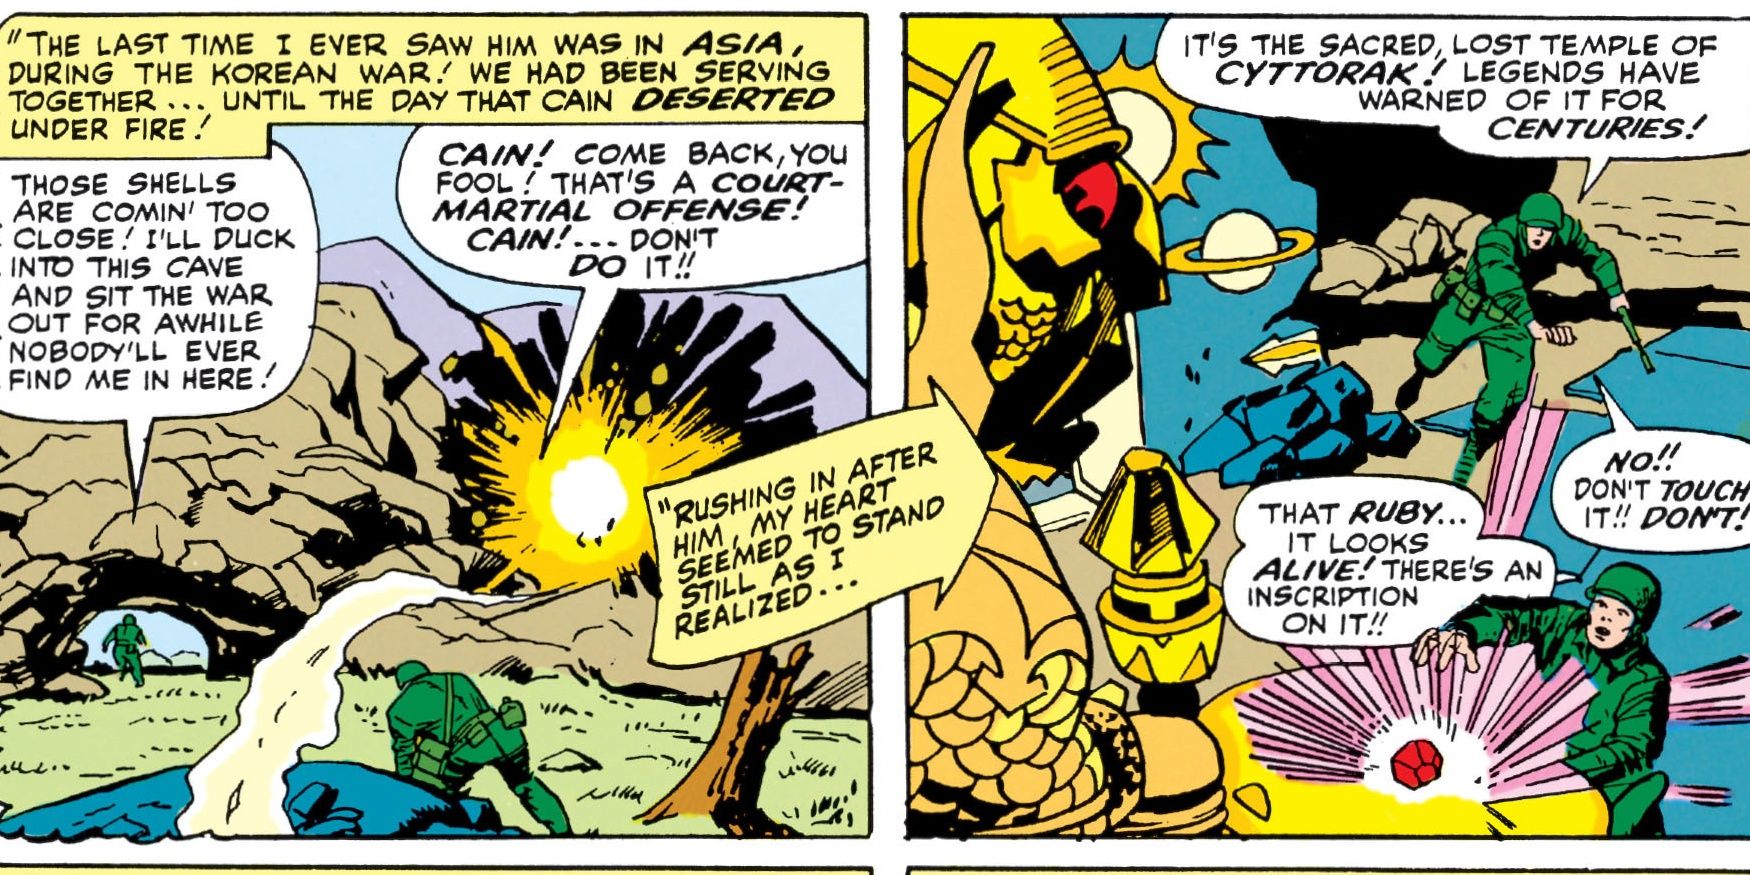 Charles Xavier and Juggernaut in Korea in Marvel Comics